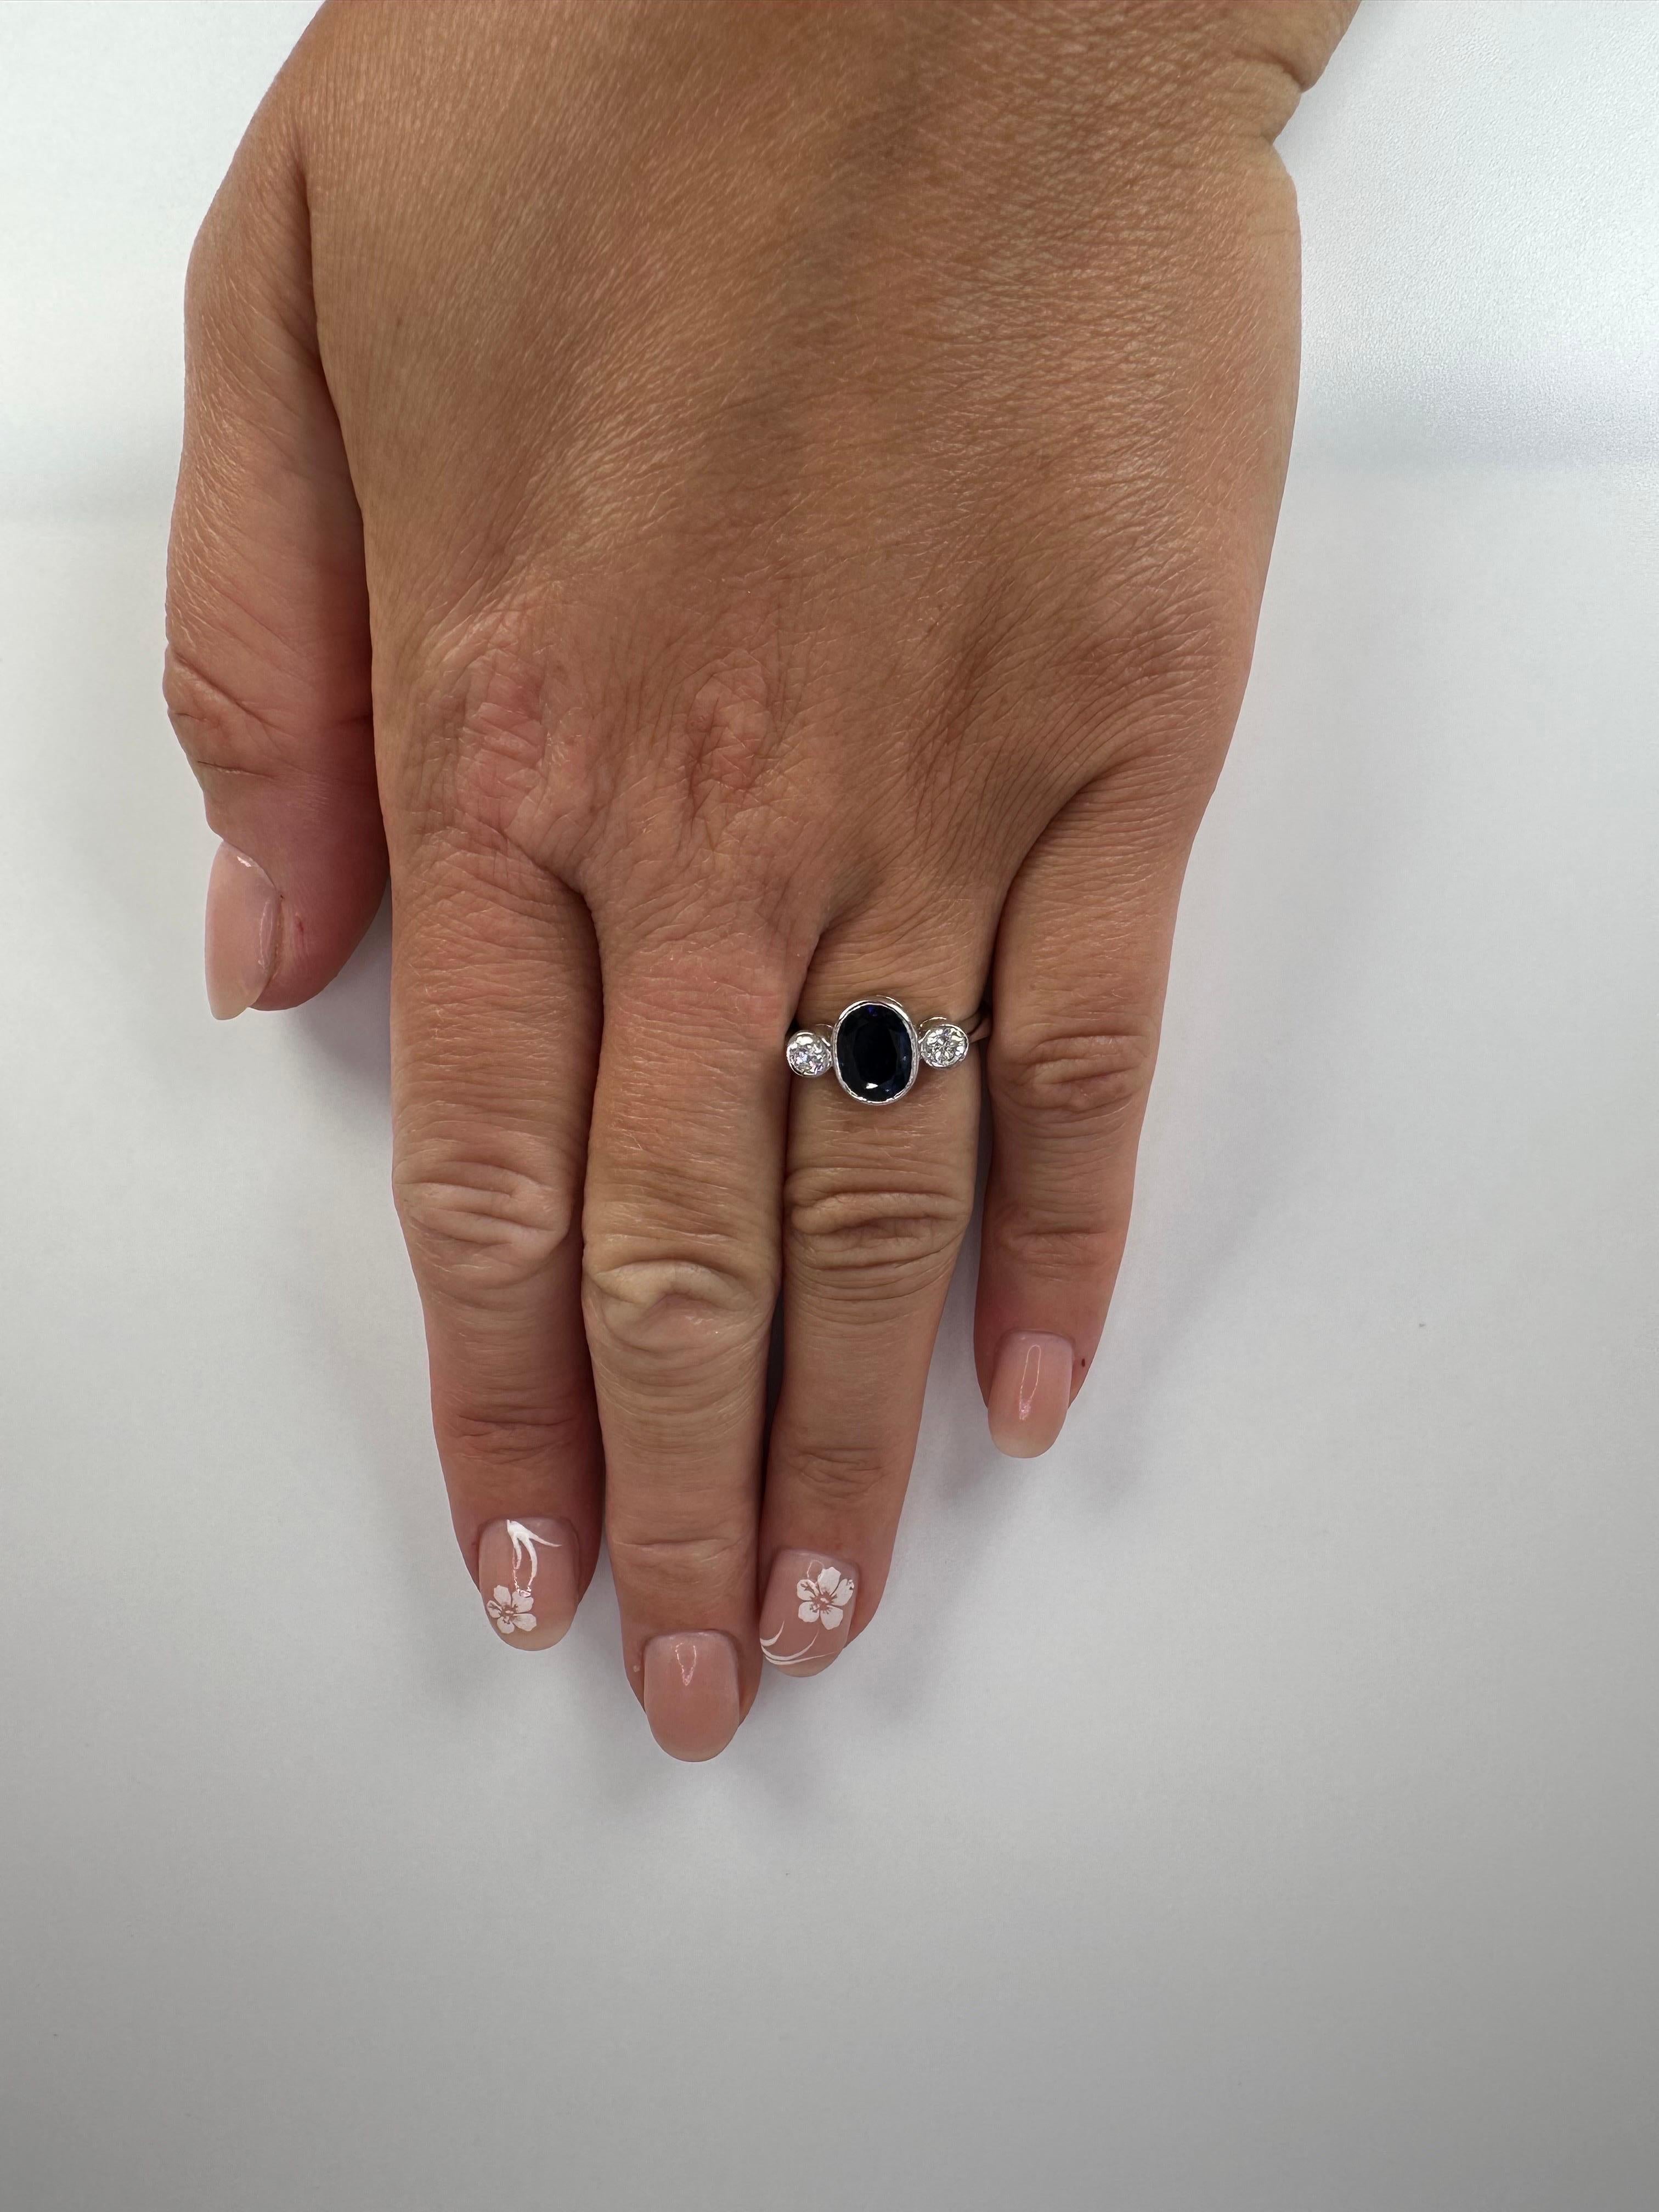 Oval Cut Sapphire Diamond Ring 18 Karat White Gold 2.20 Carat Rare Three Stone Ring For Sale